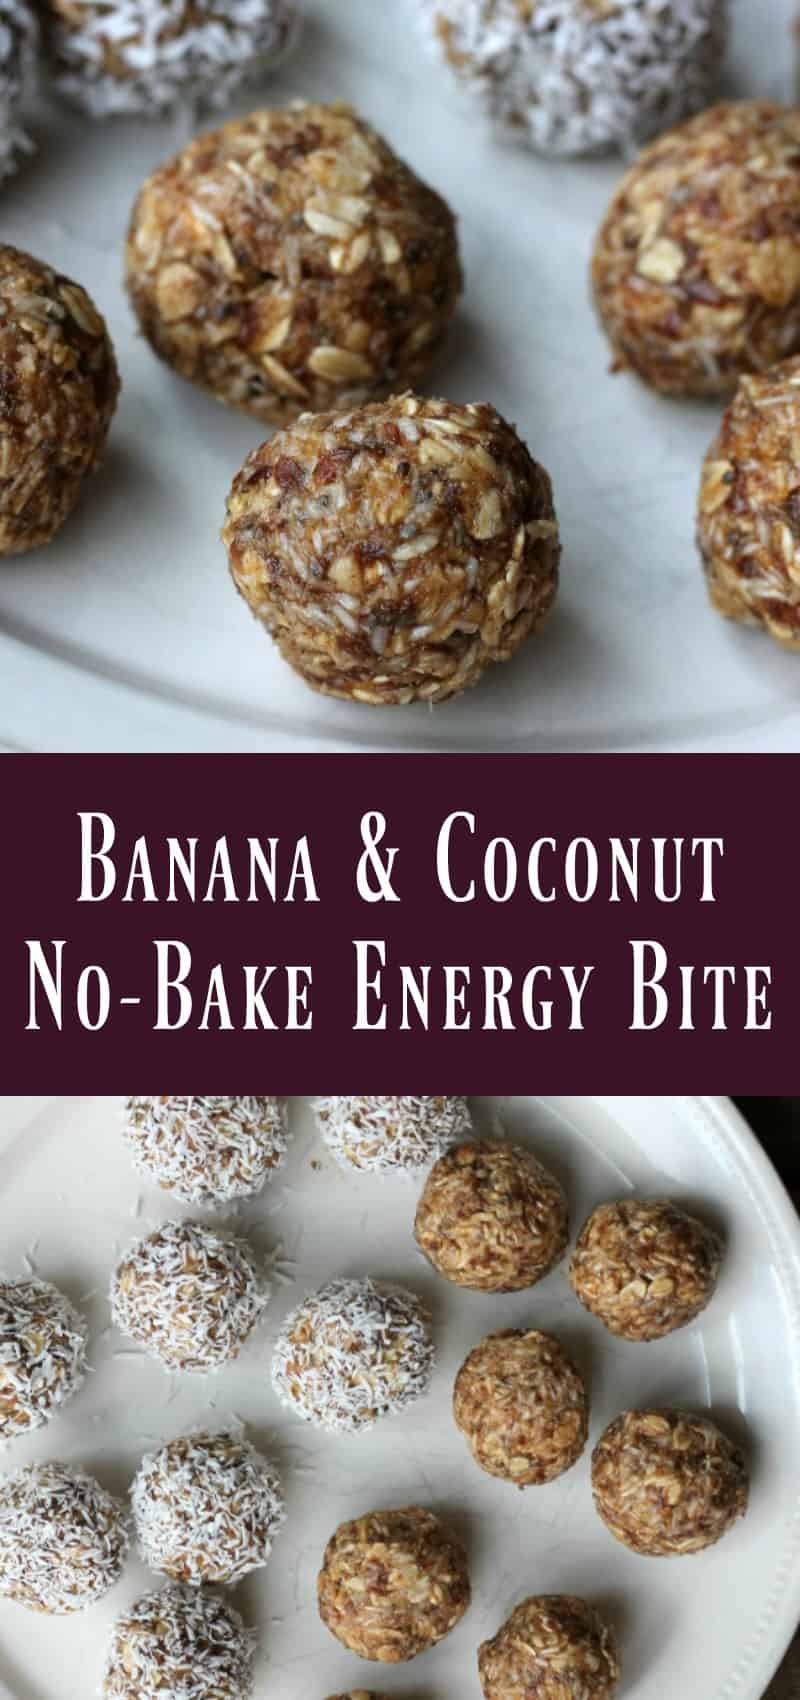 Banana & Coconut No-bake Energy Bite